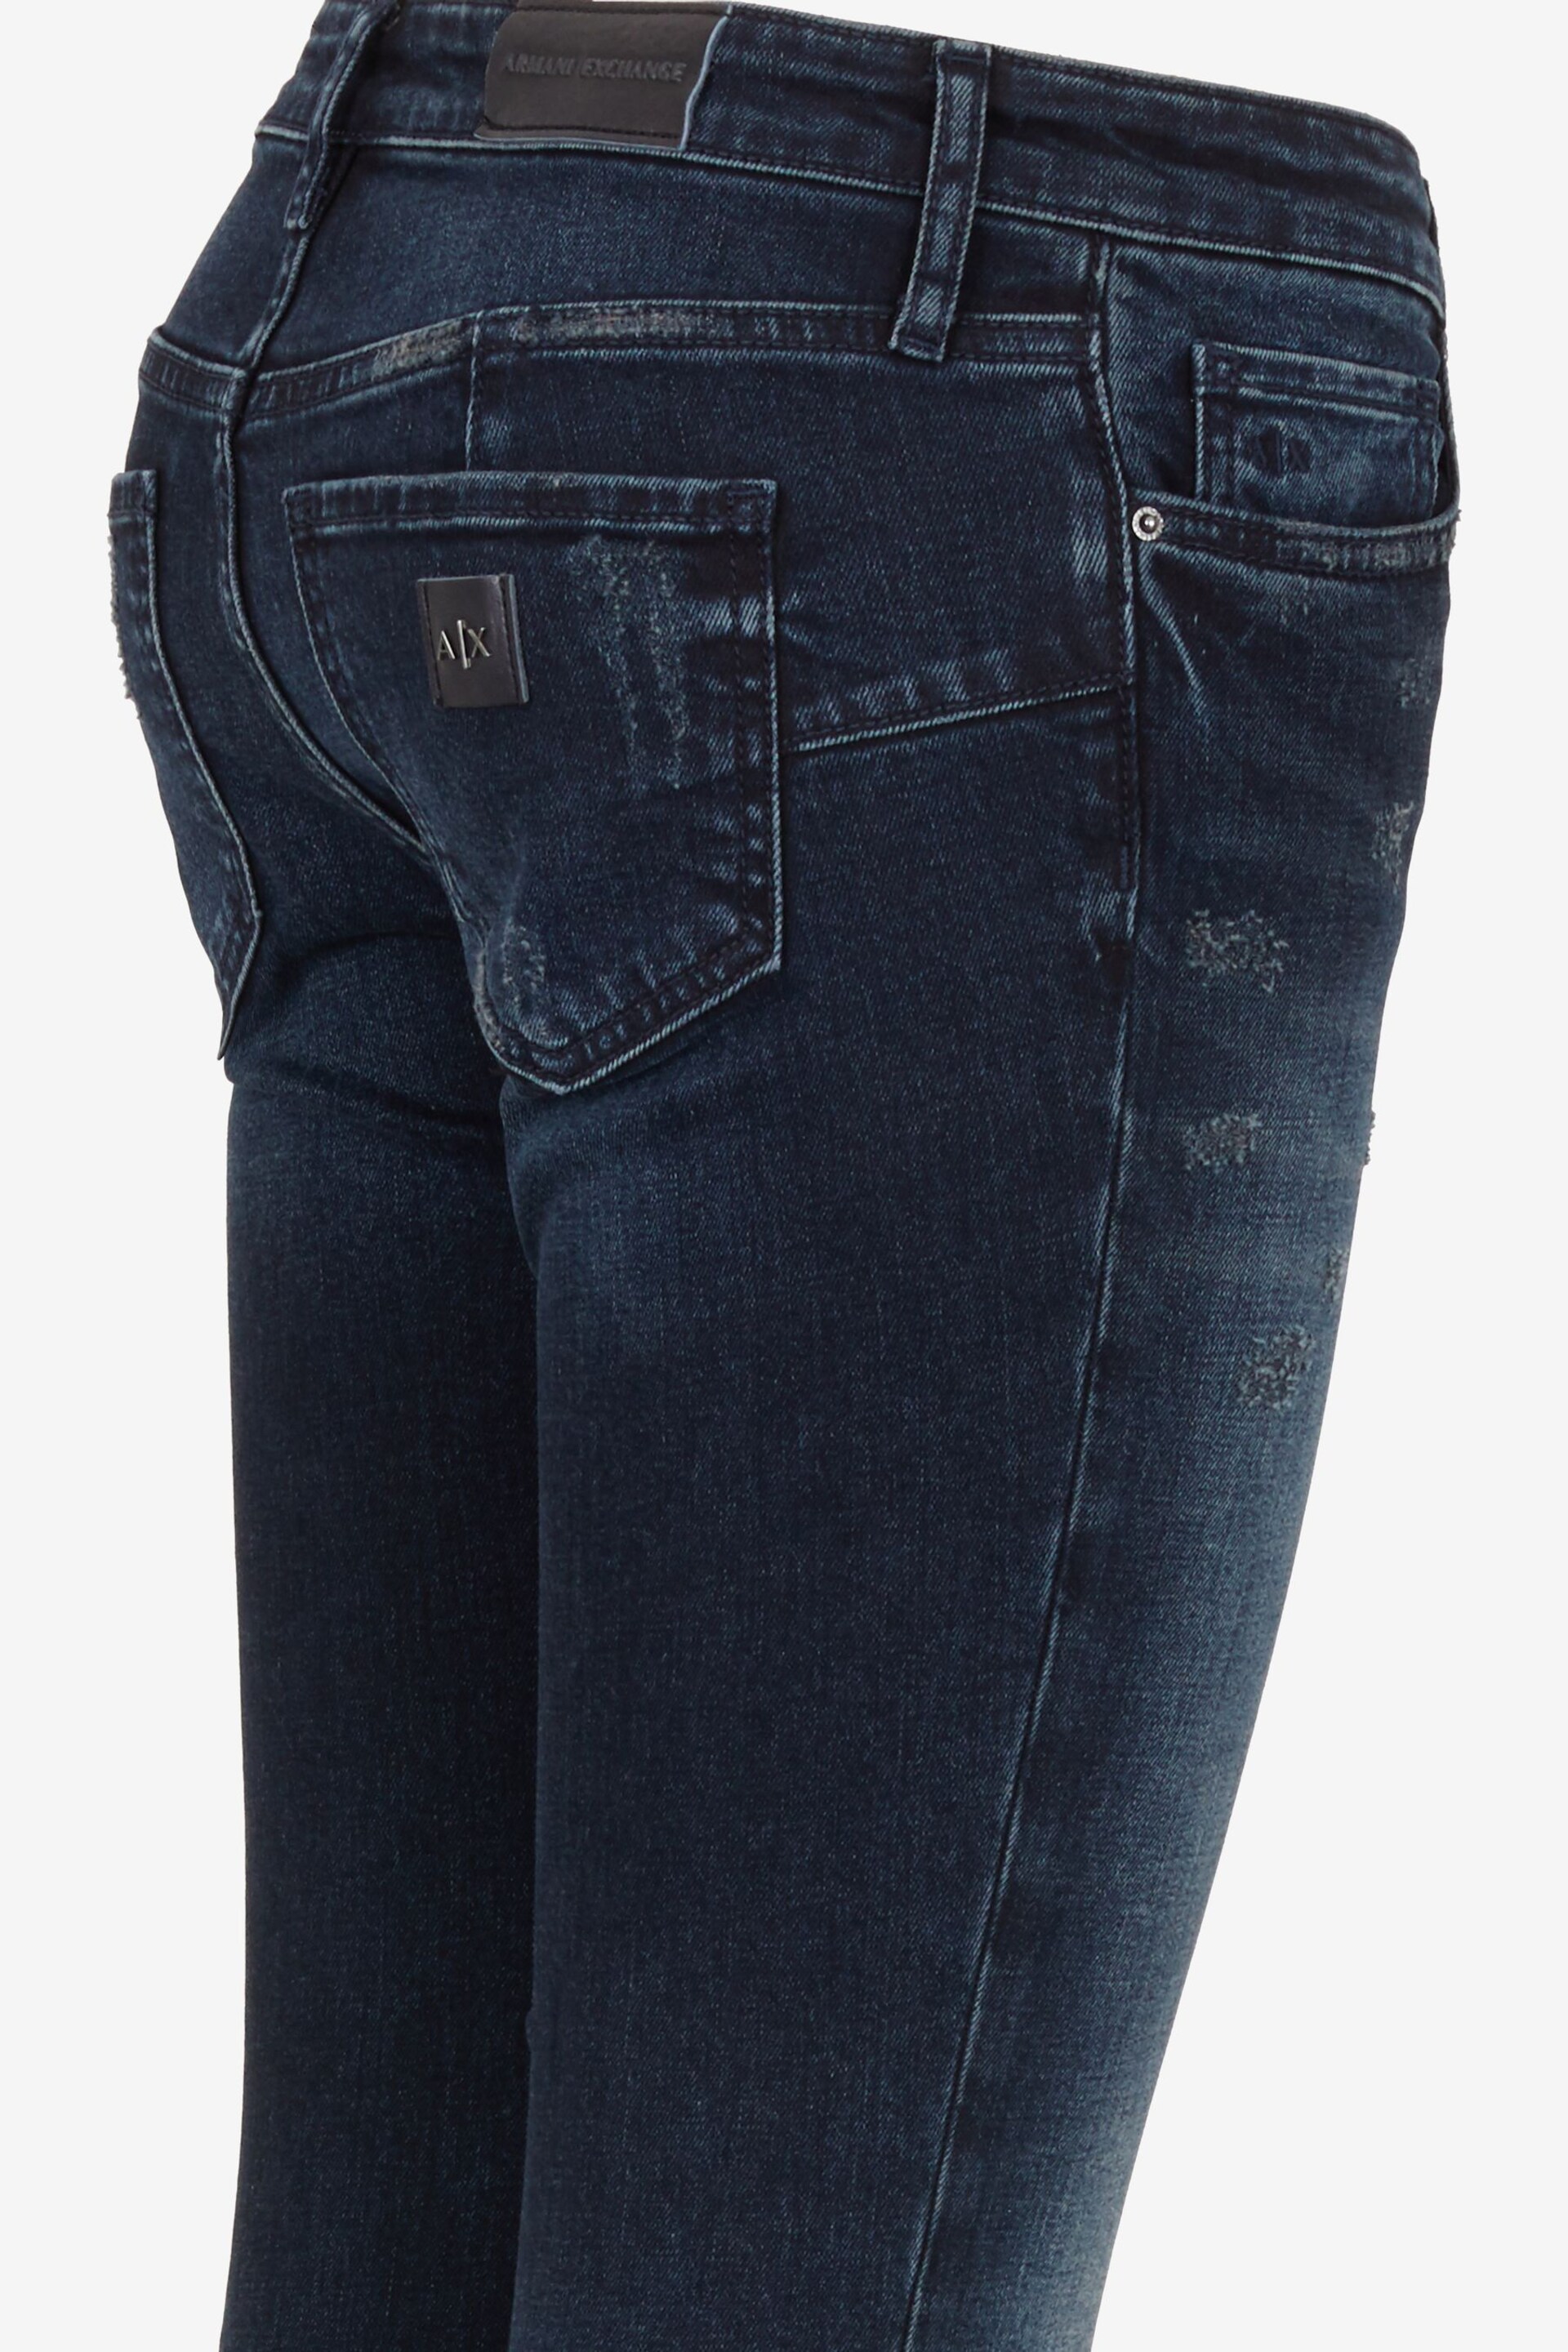 Armani Exchange Denim Dark Wash J69 Skinny Fit Jeans - Image 5 of 5